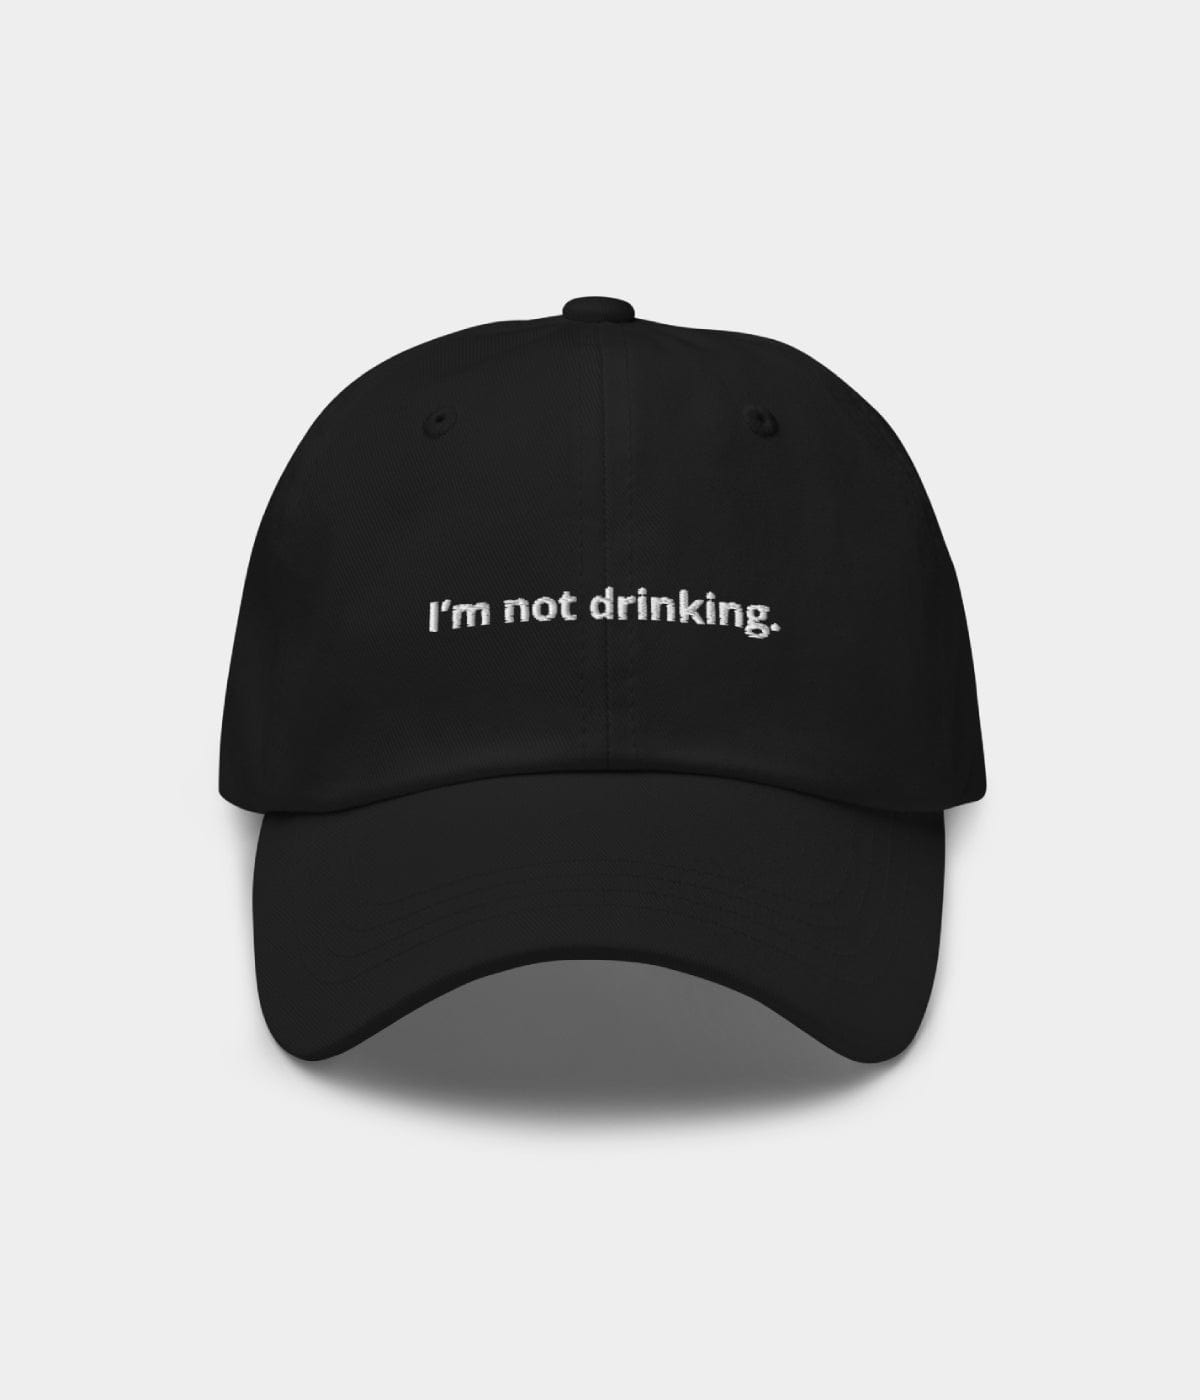 NOT DRINKING.